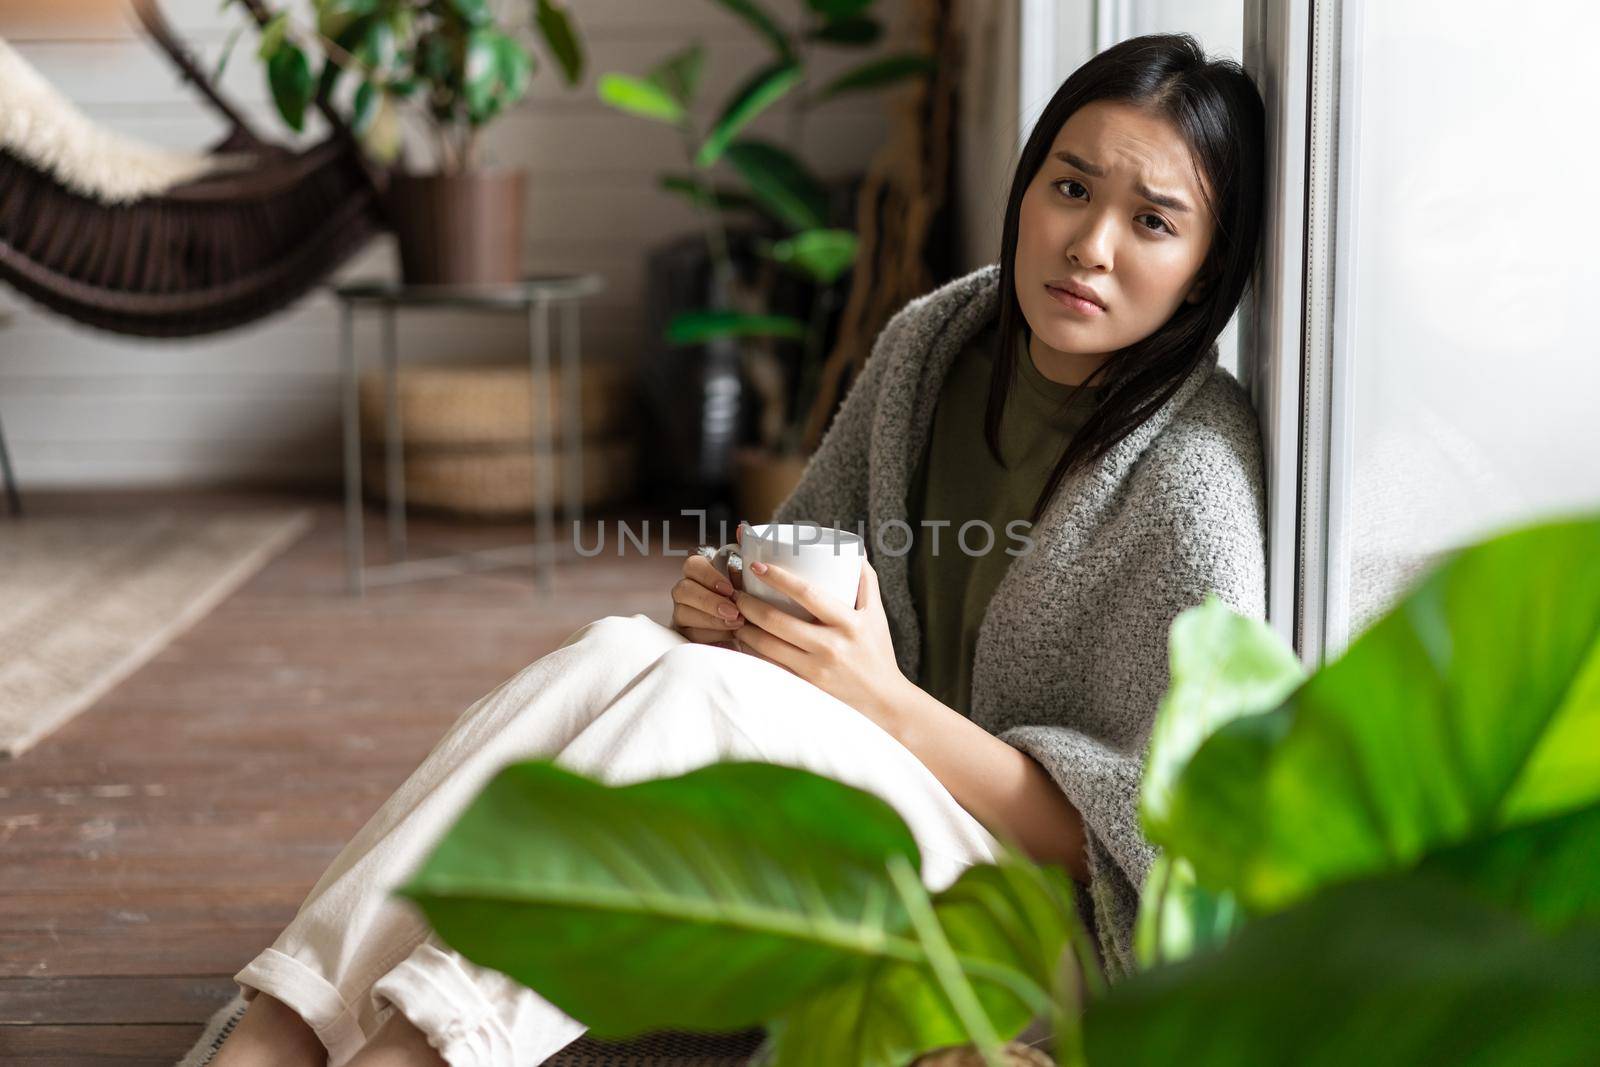 Sad sick asian girl sitting with coffee mug near window on floor, looking upset and unhappy.